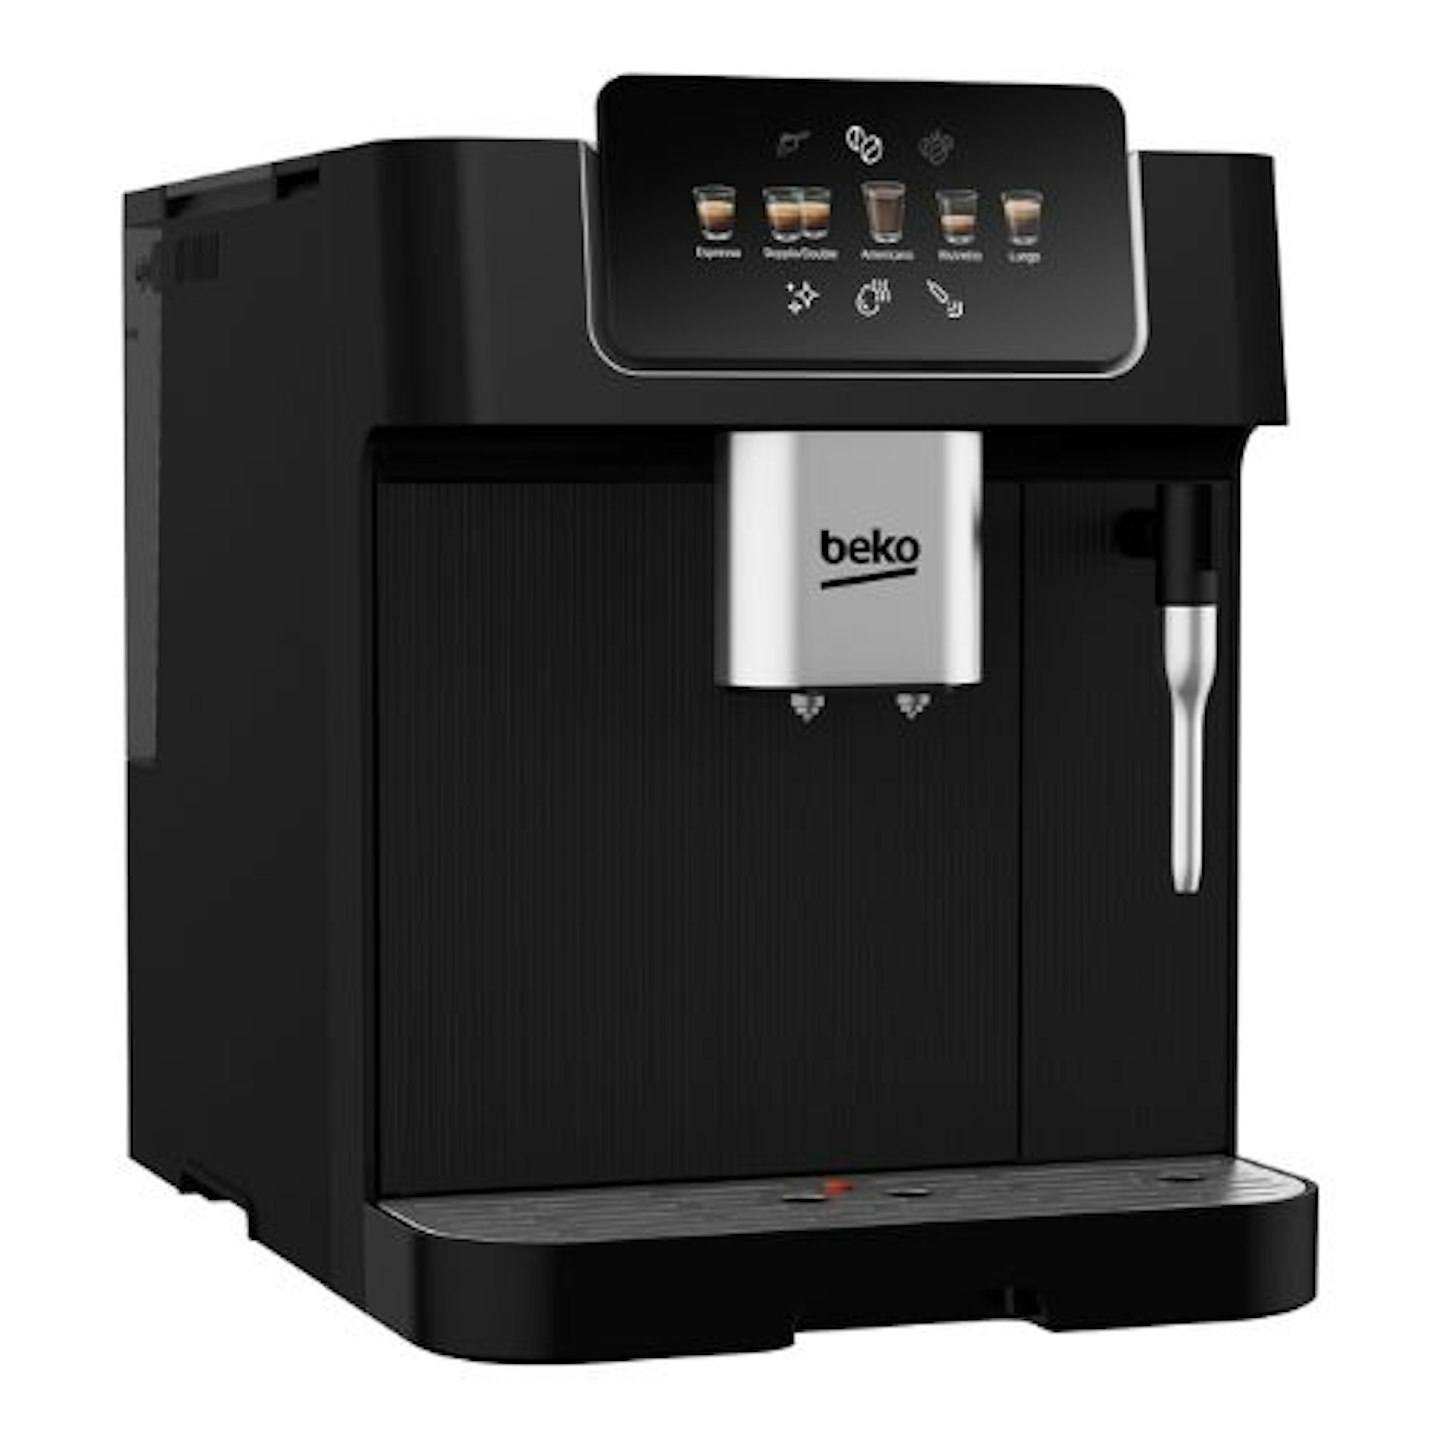 Beko CaffeExperto Bean to Cup Coffee Espresso Machine